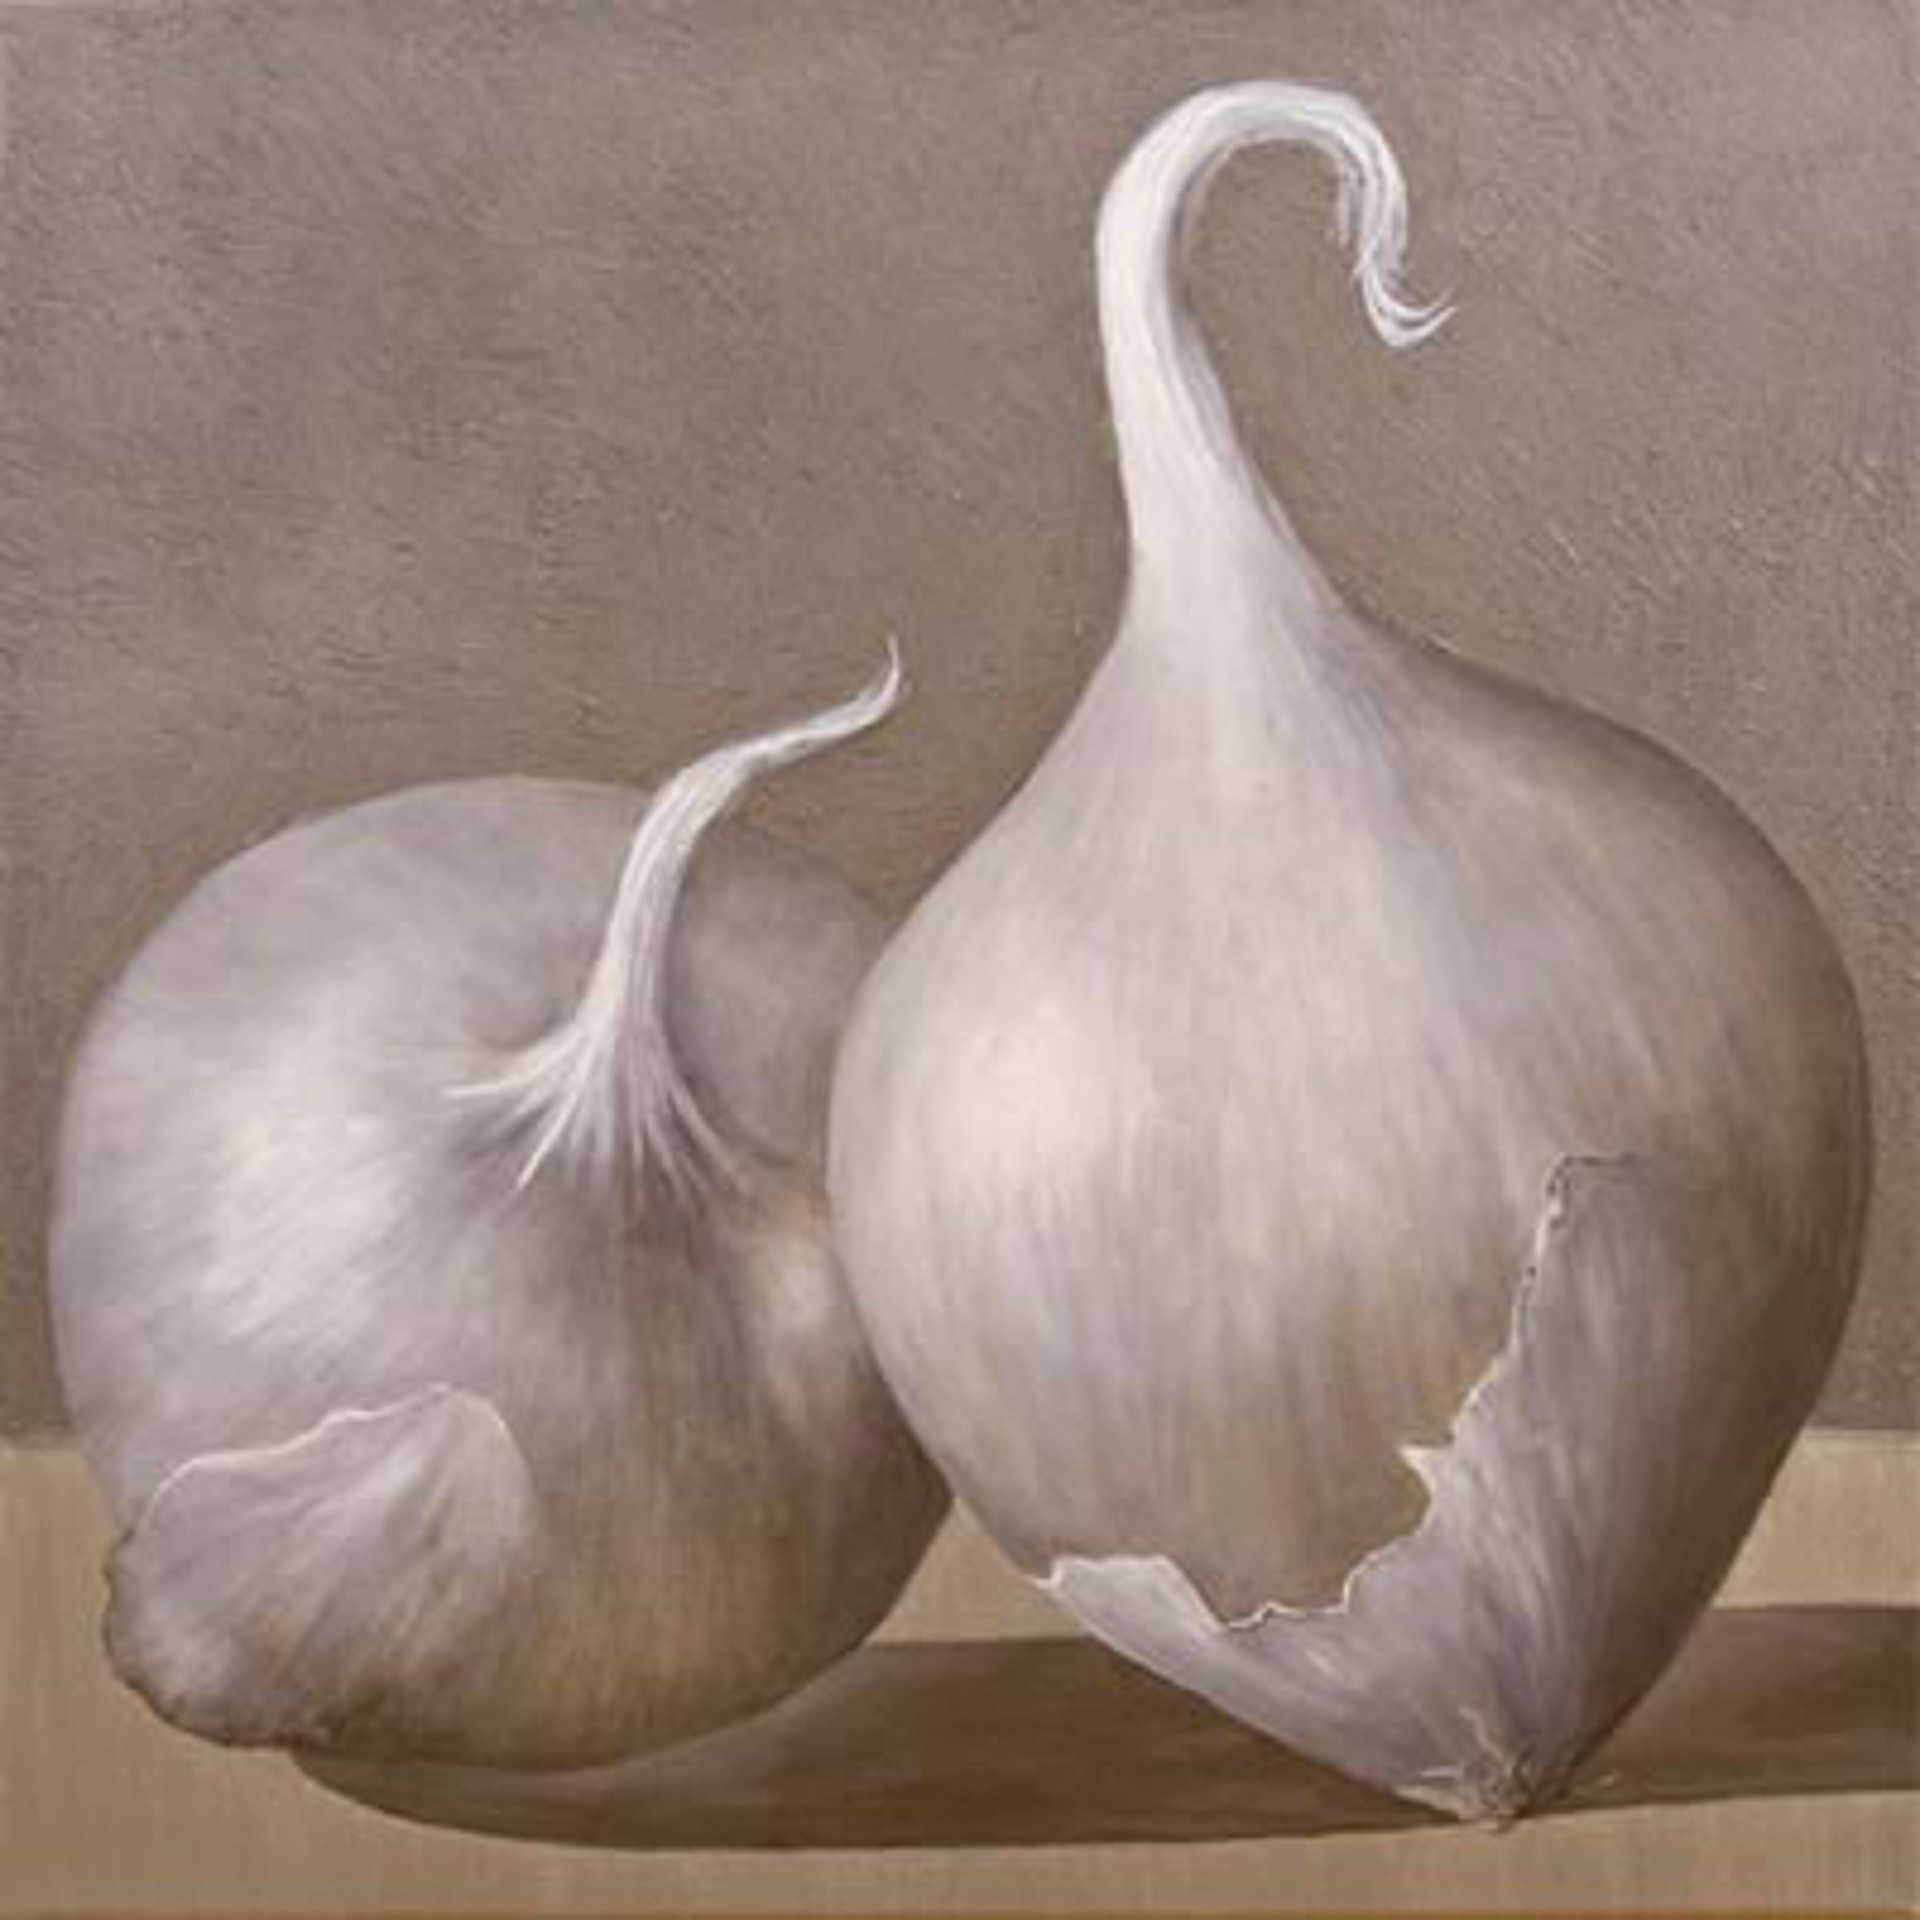 Onions by Bill Chisholm